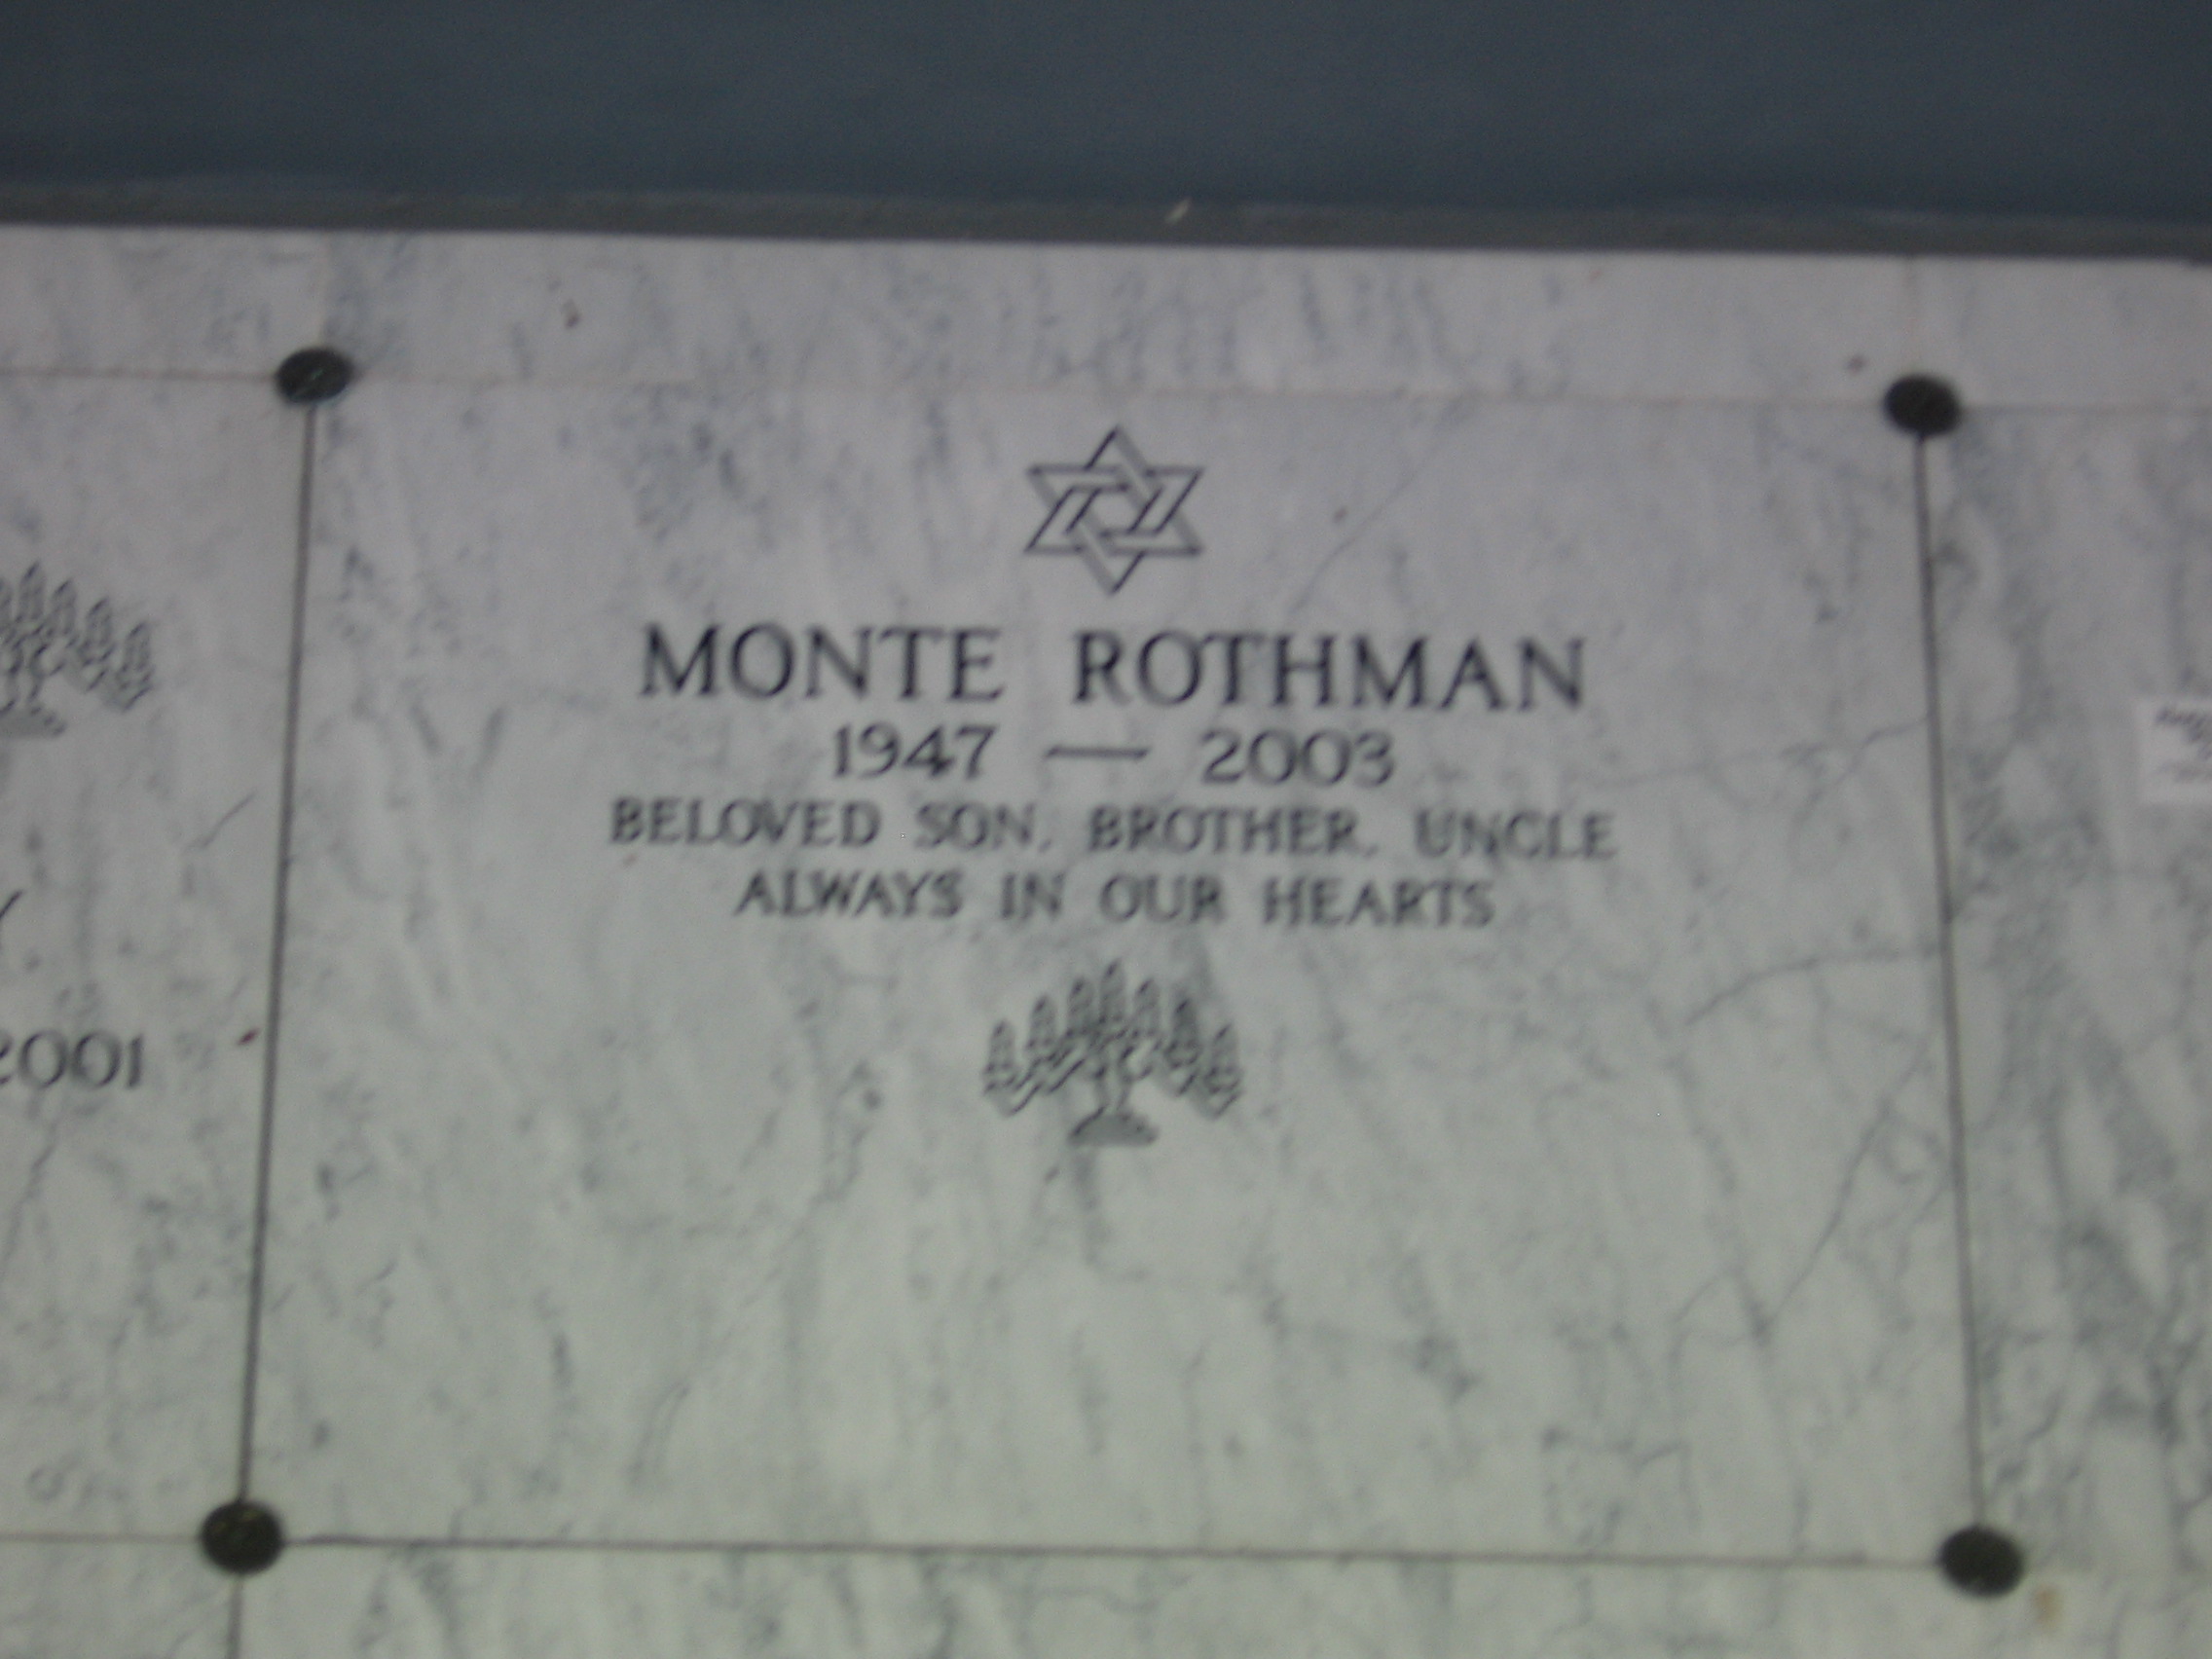 Monte Rothman